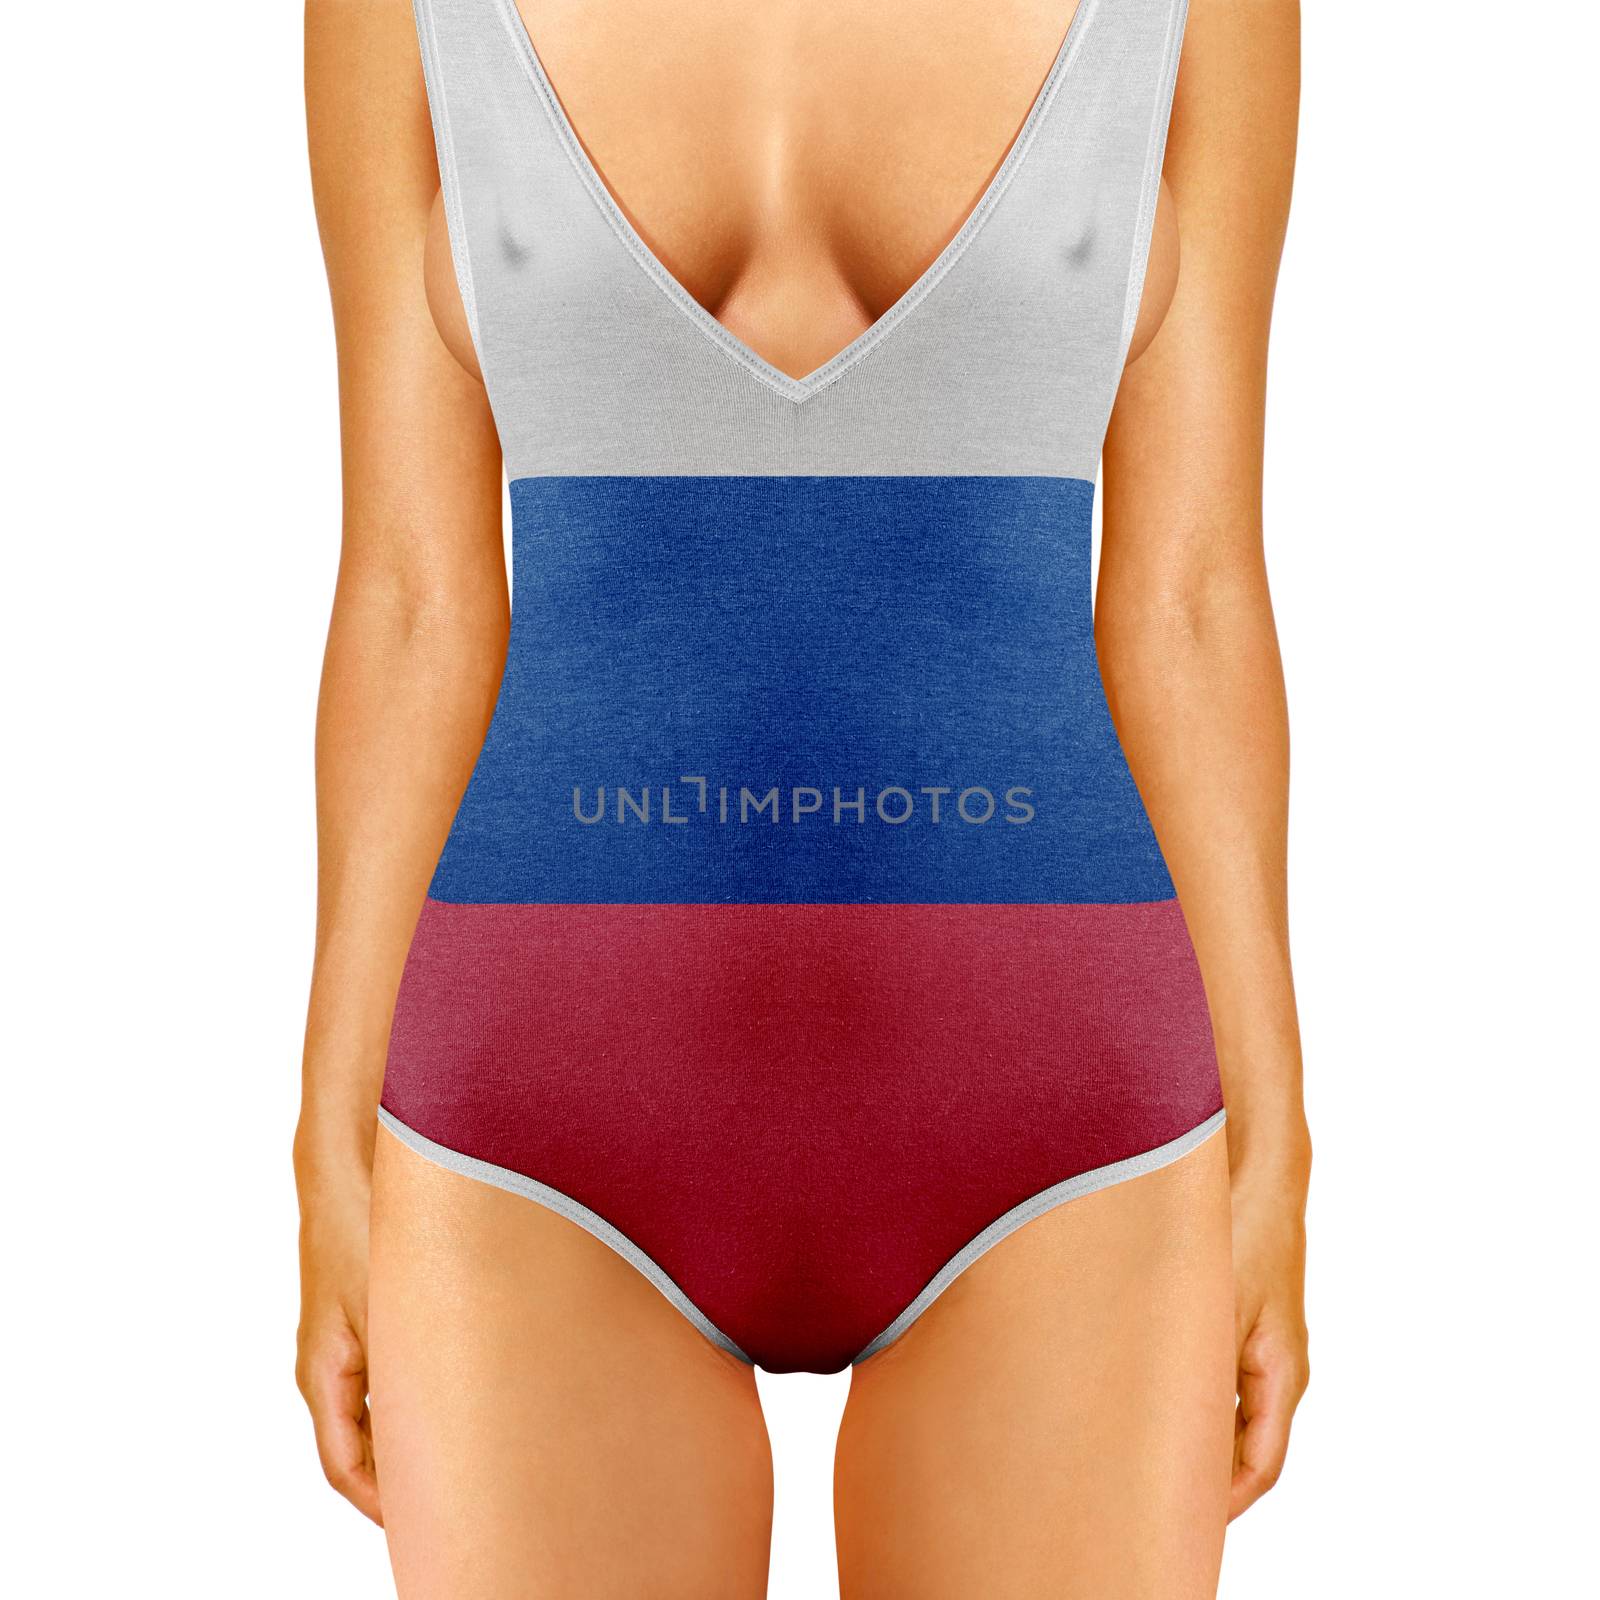 body of woman in swimwear like russian flag on white background